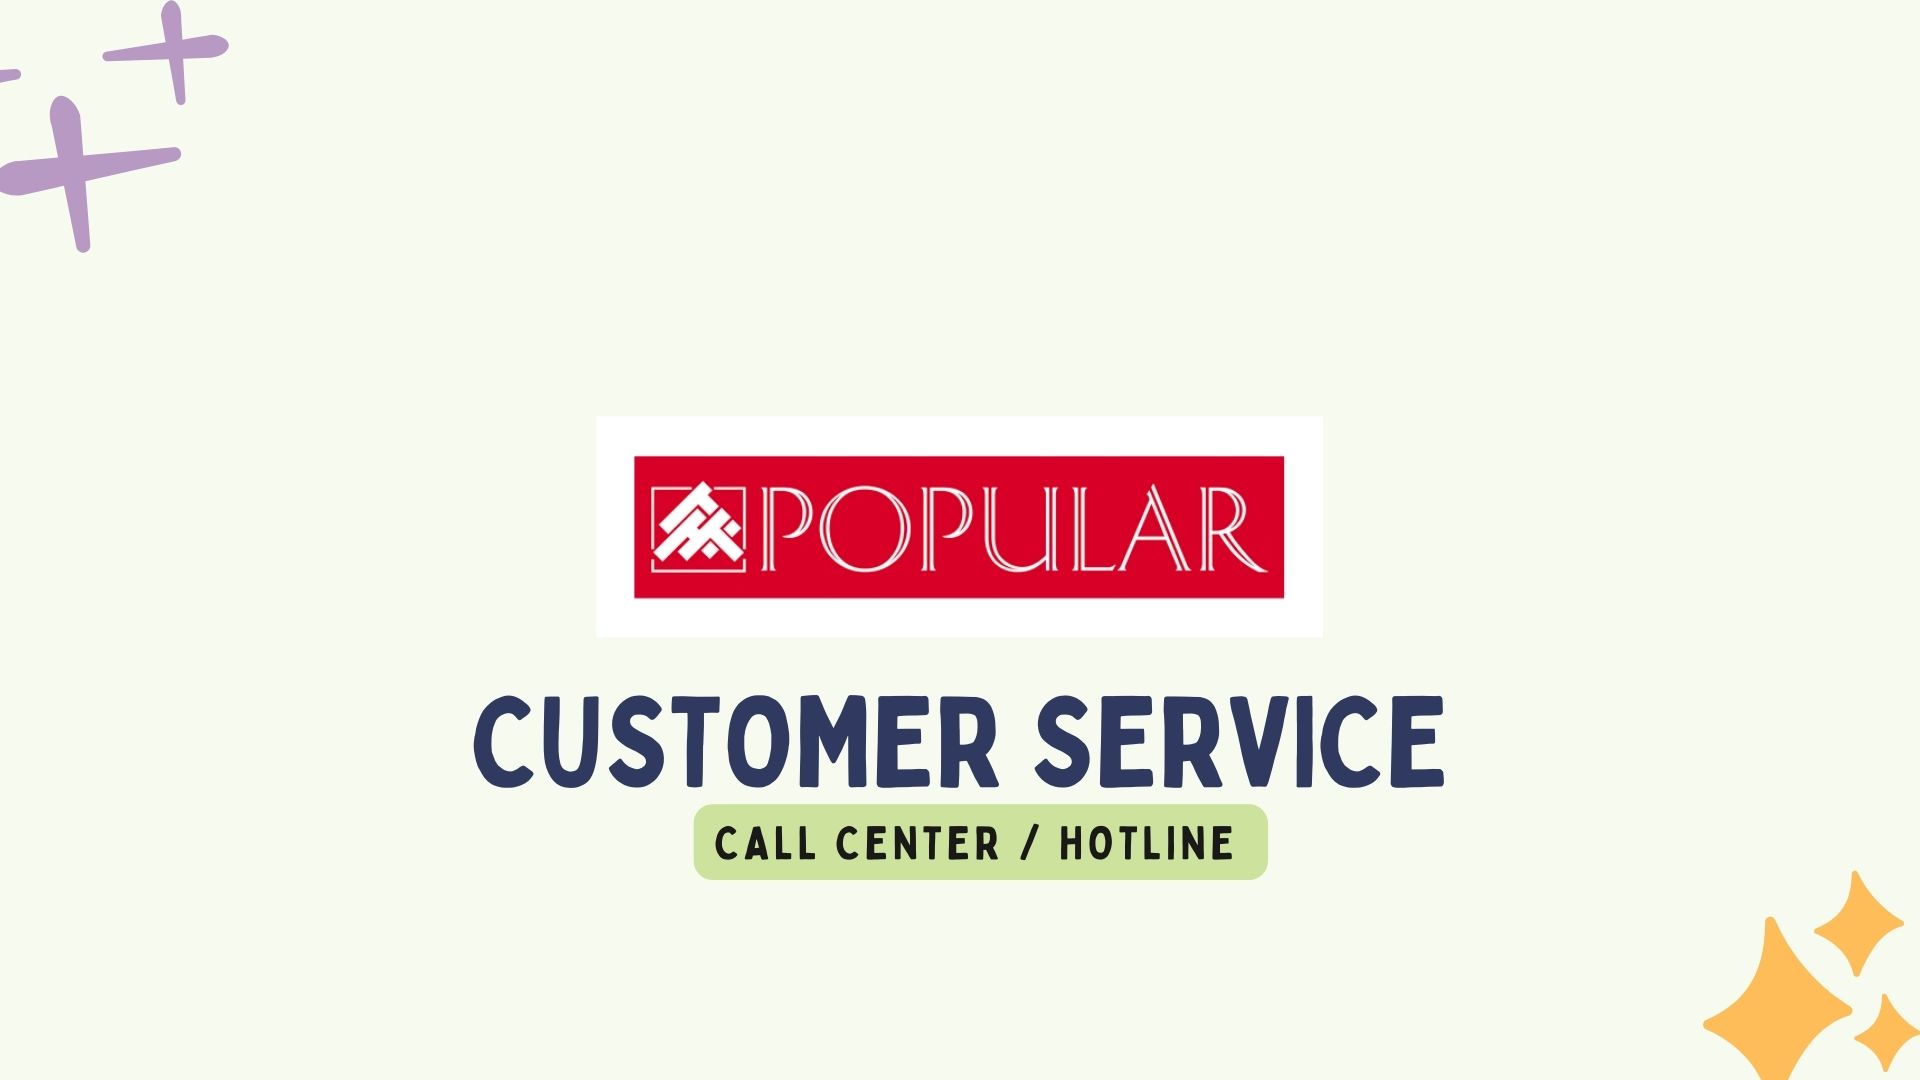 Popular Bookstore Customer Service